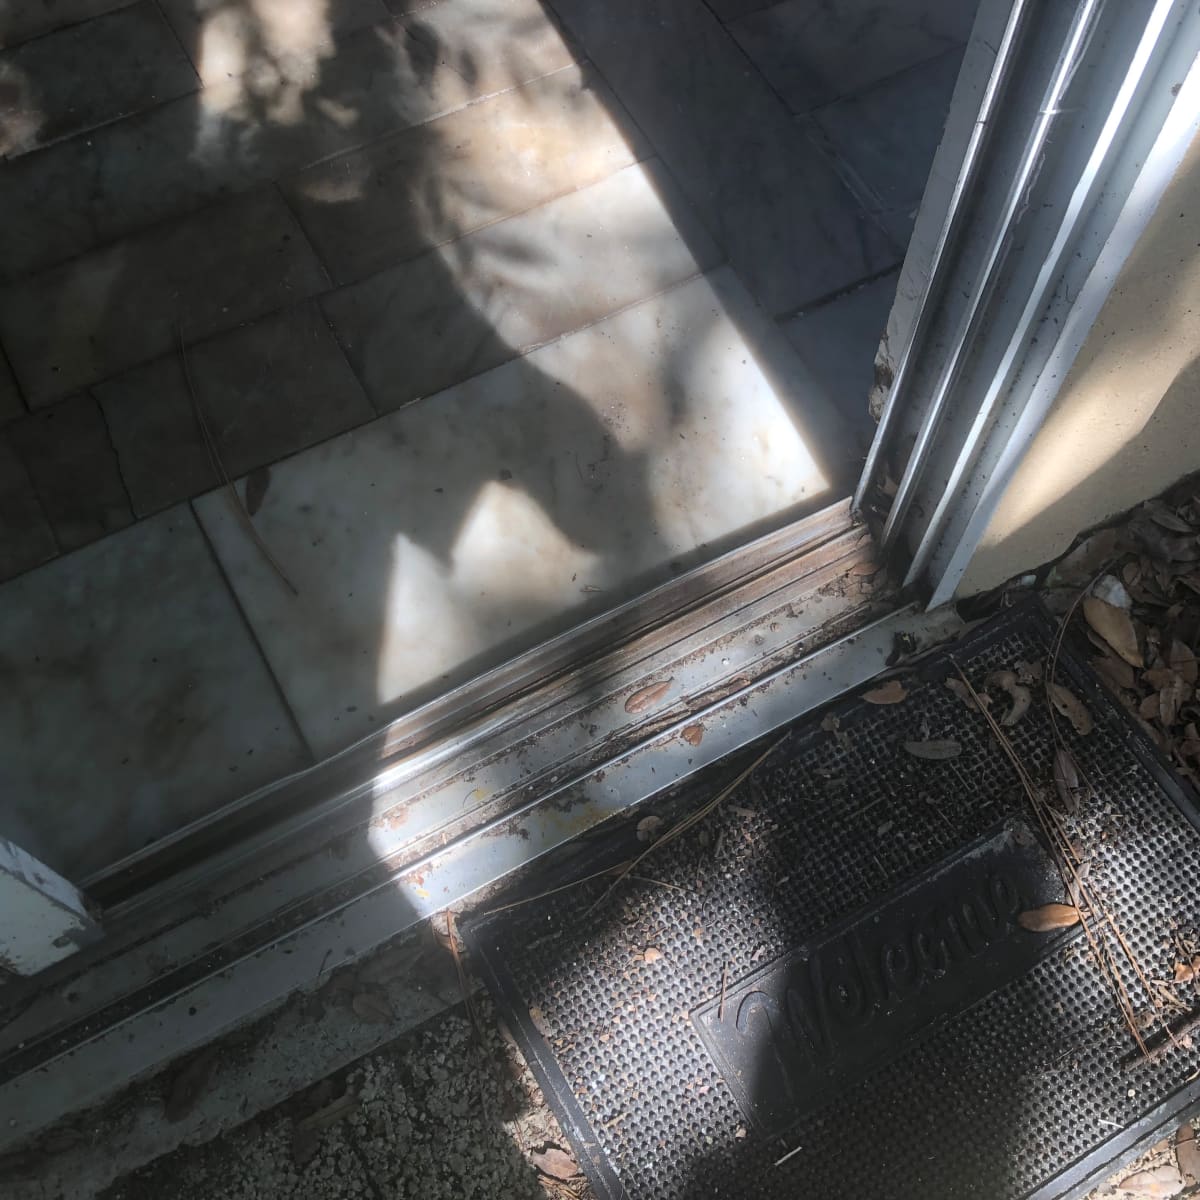 How do you prevent and remove mold from sliding glass door tracks? - EZ Sliding  Doors Las Vegas